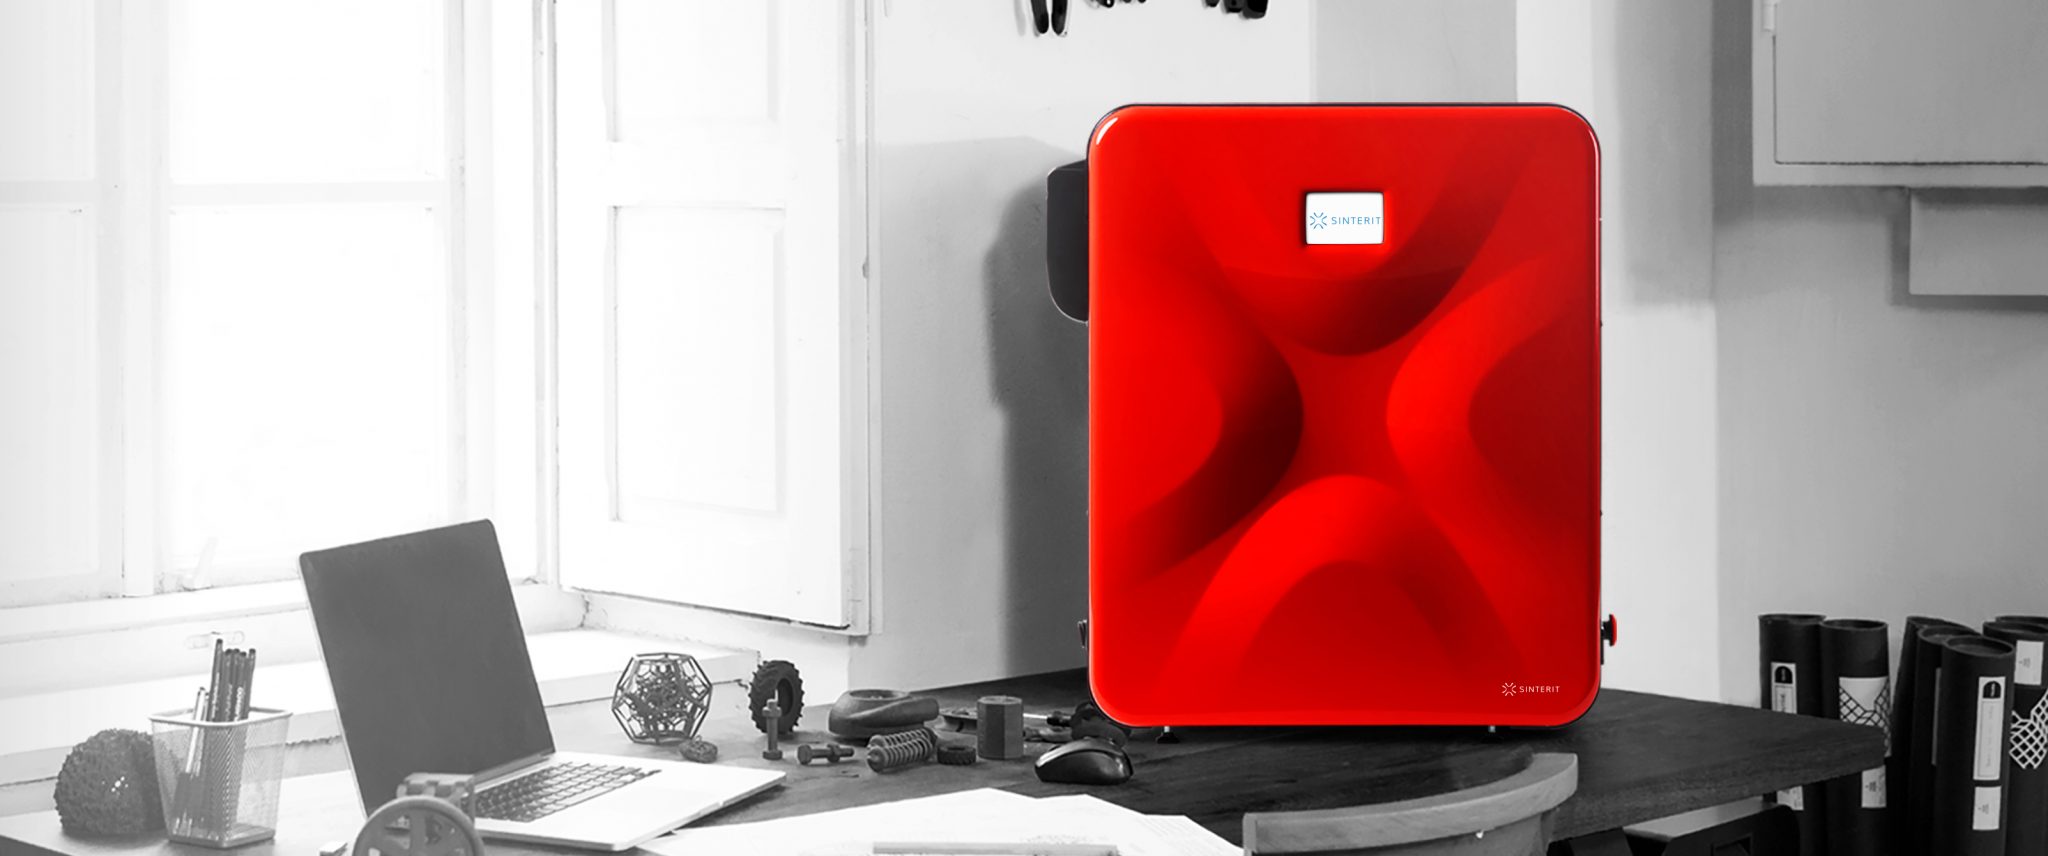 The LISA 1.5 SLS 3D printer. Image via Sinterit.